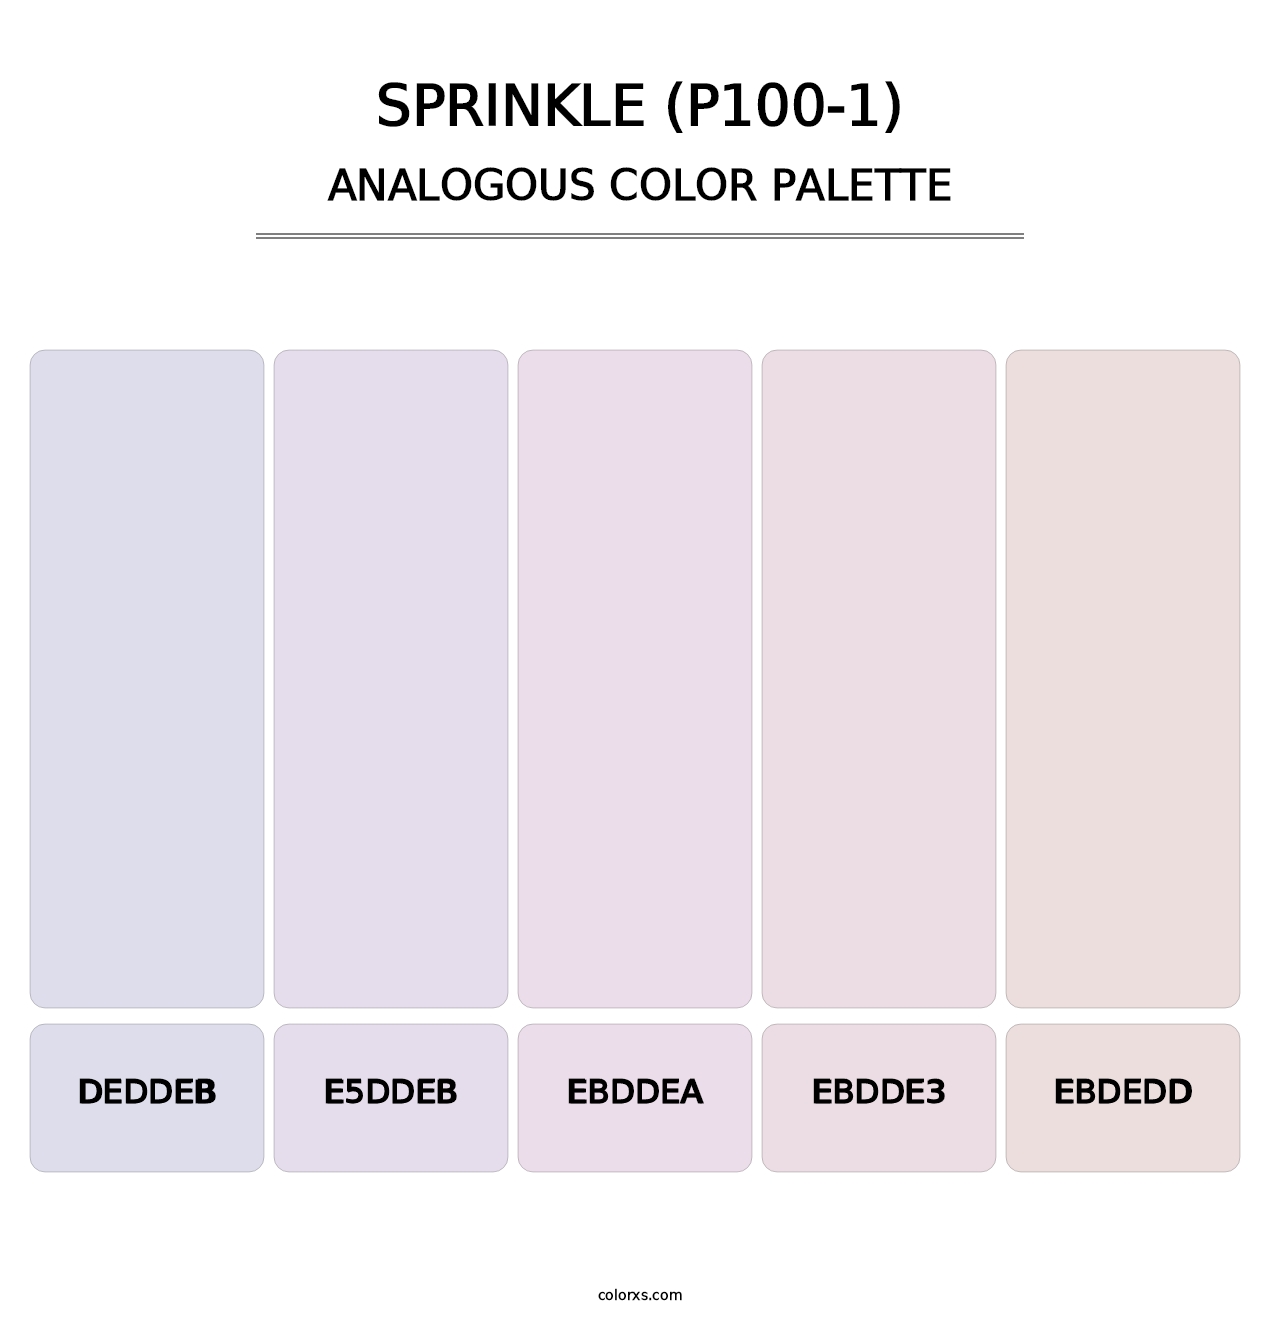 Sprinkle (P100-1) - Analogous Color Palette